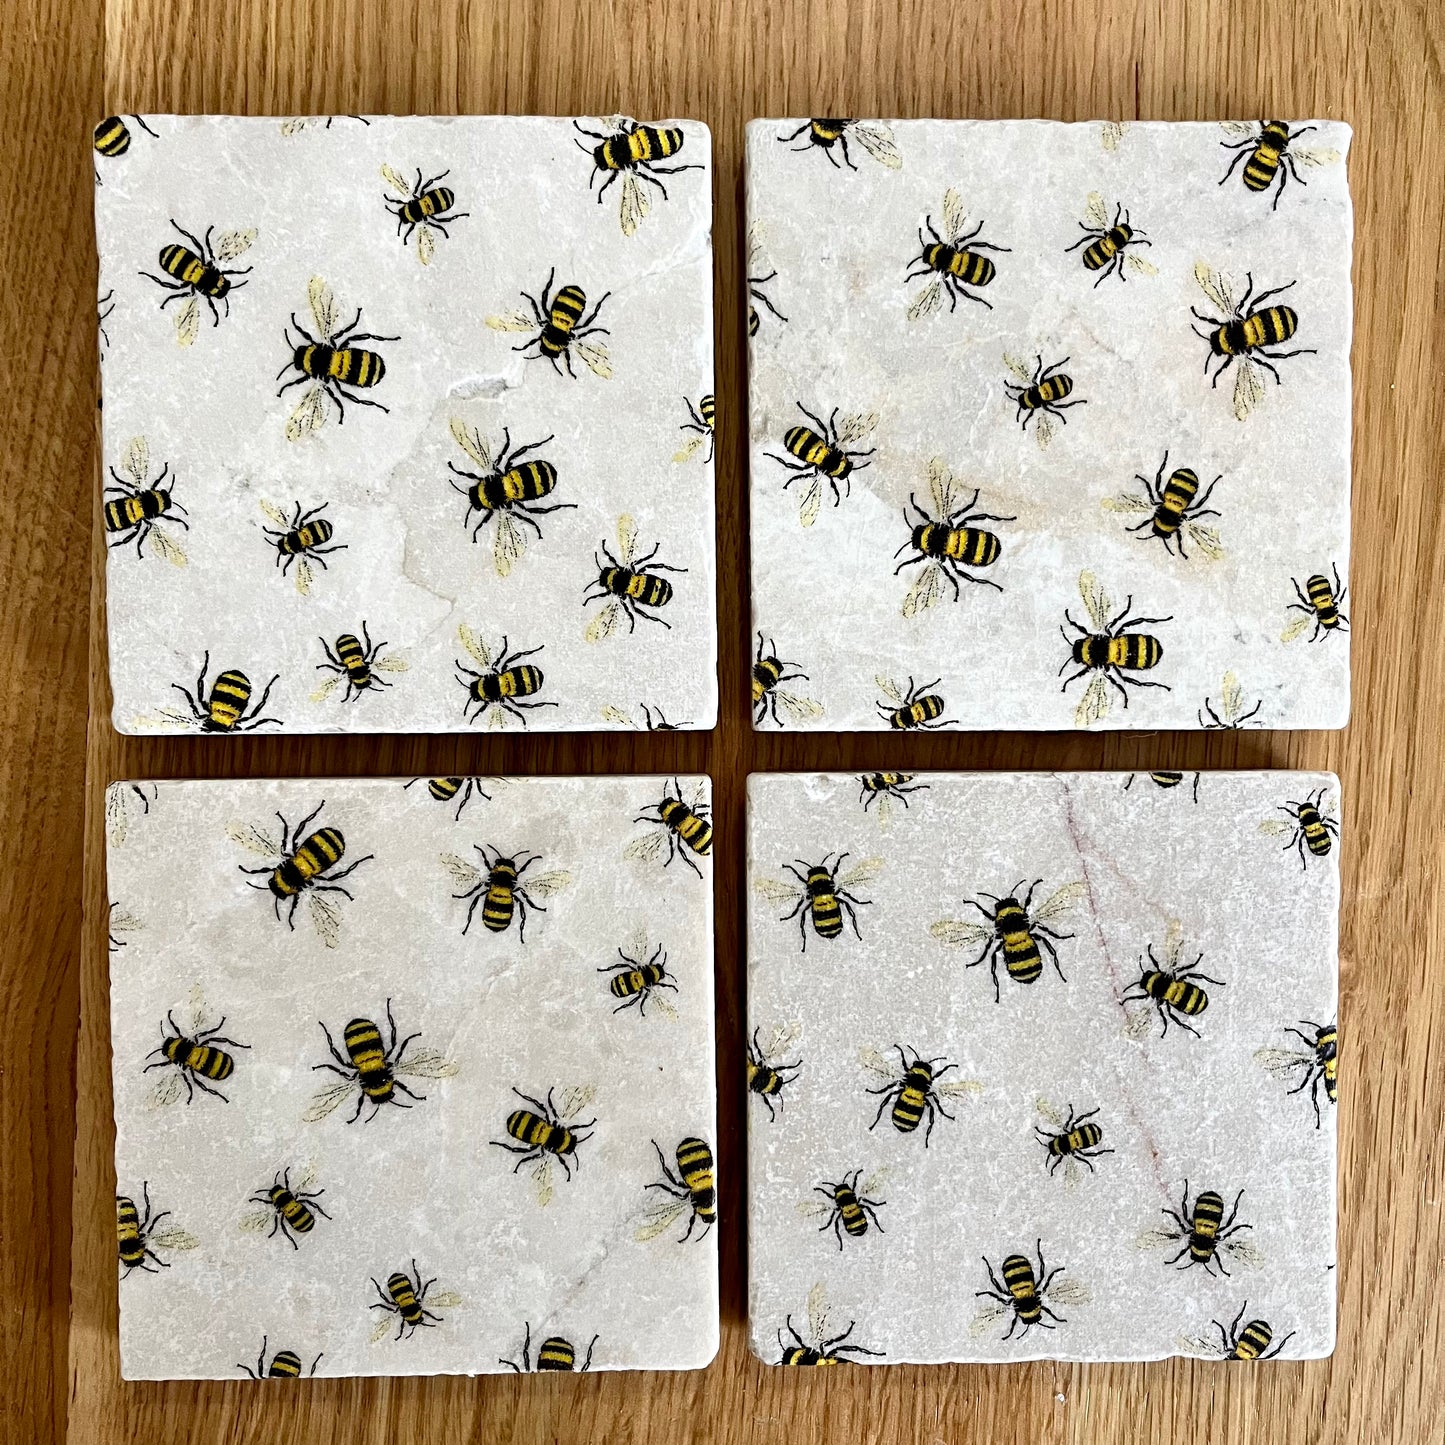 Scattered Bees Coaster Set